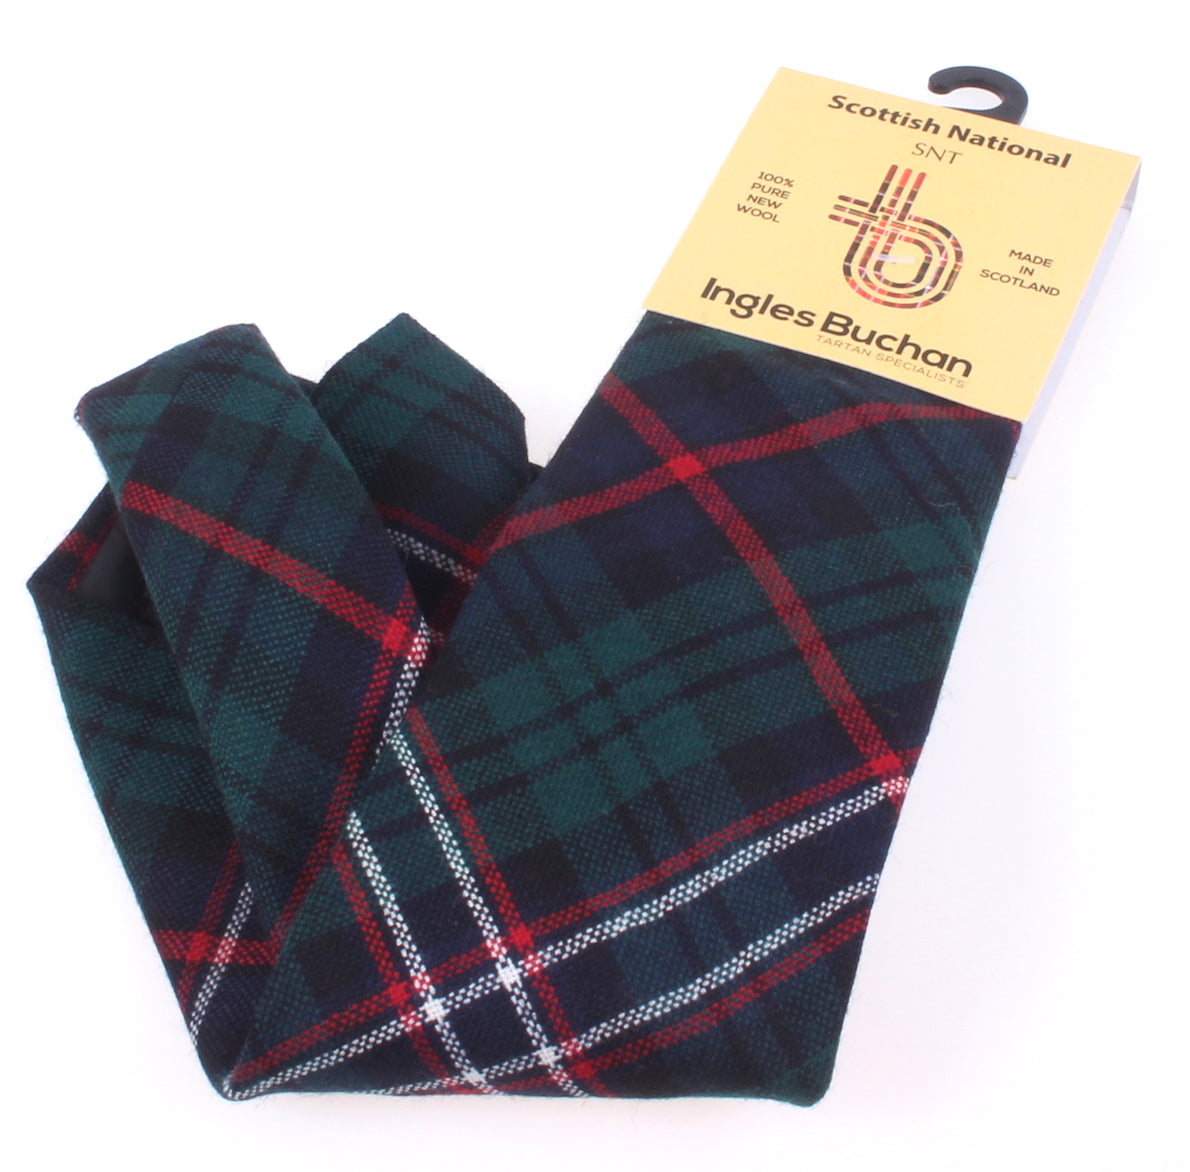 Scottish Gents Tartan Tie In Various Tartan By Ingles Buchan Made In Scotland 